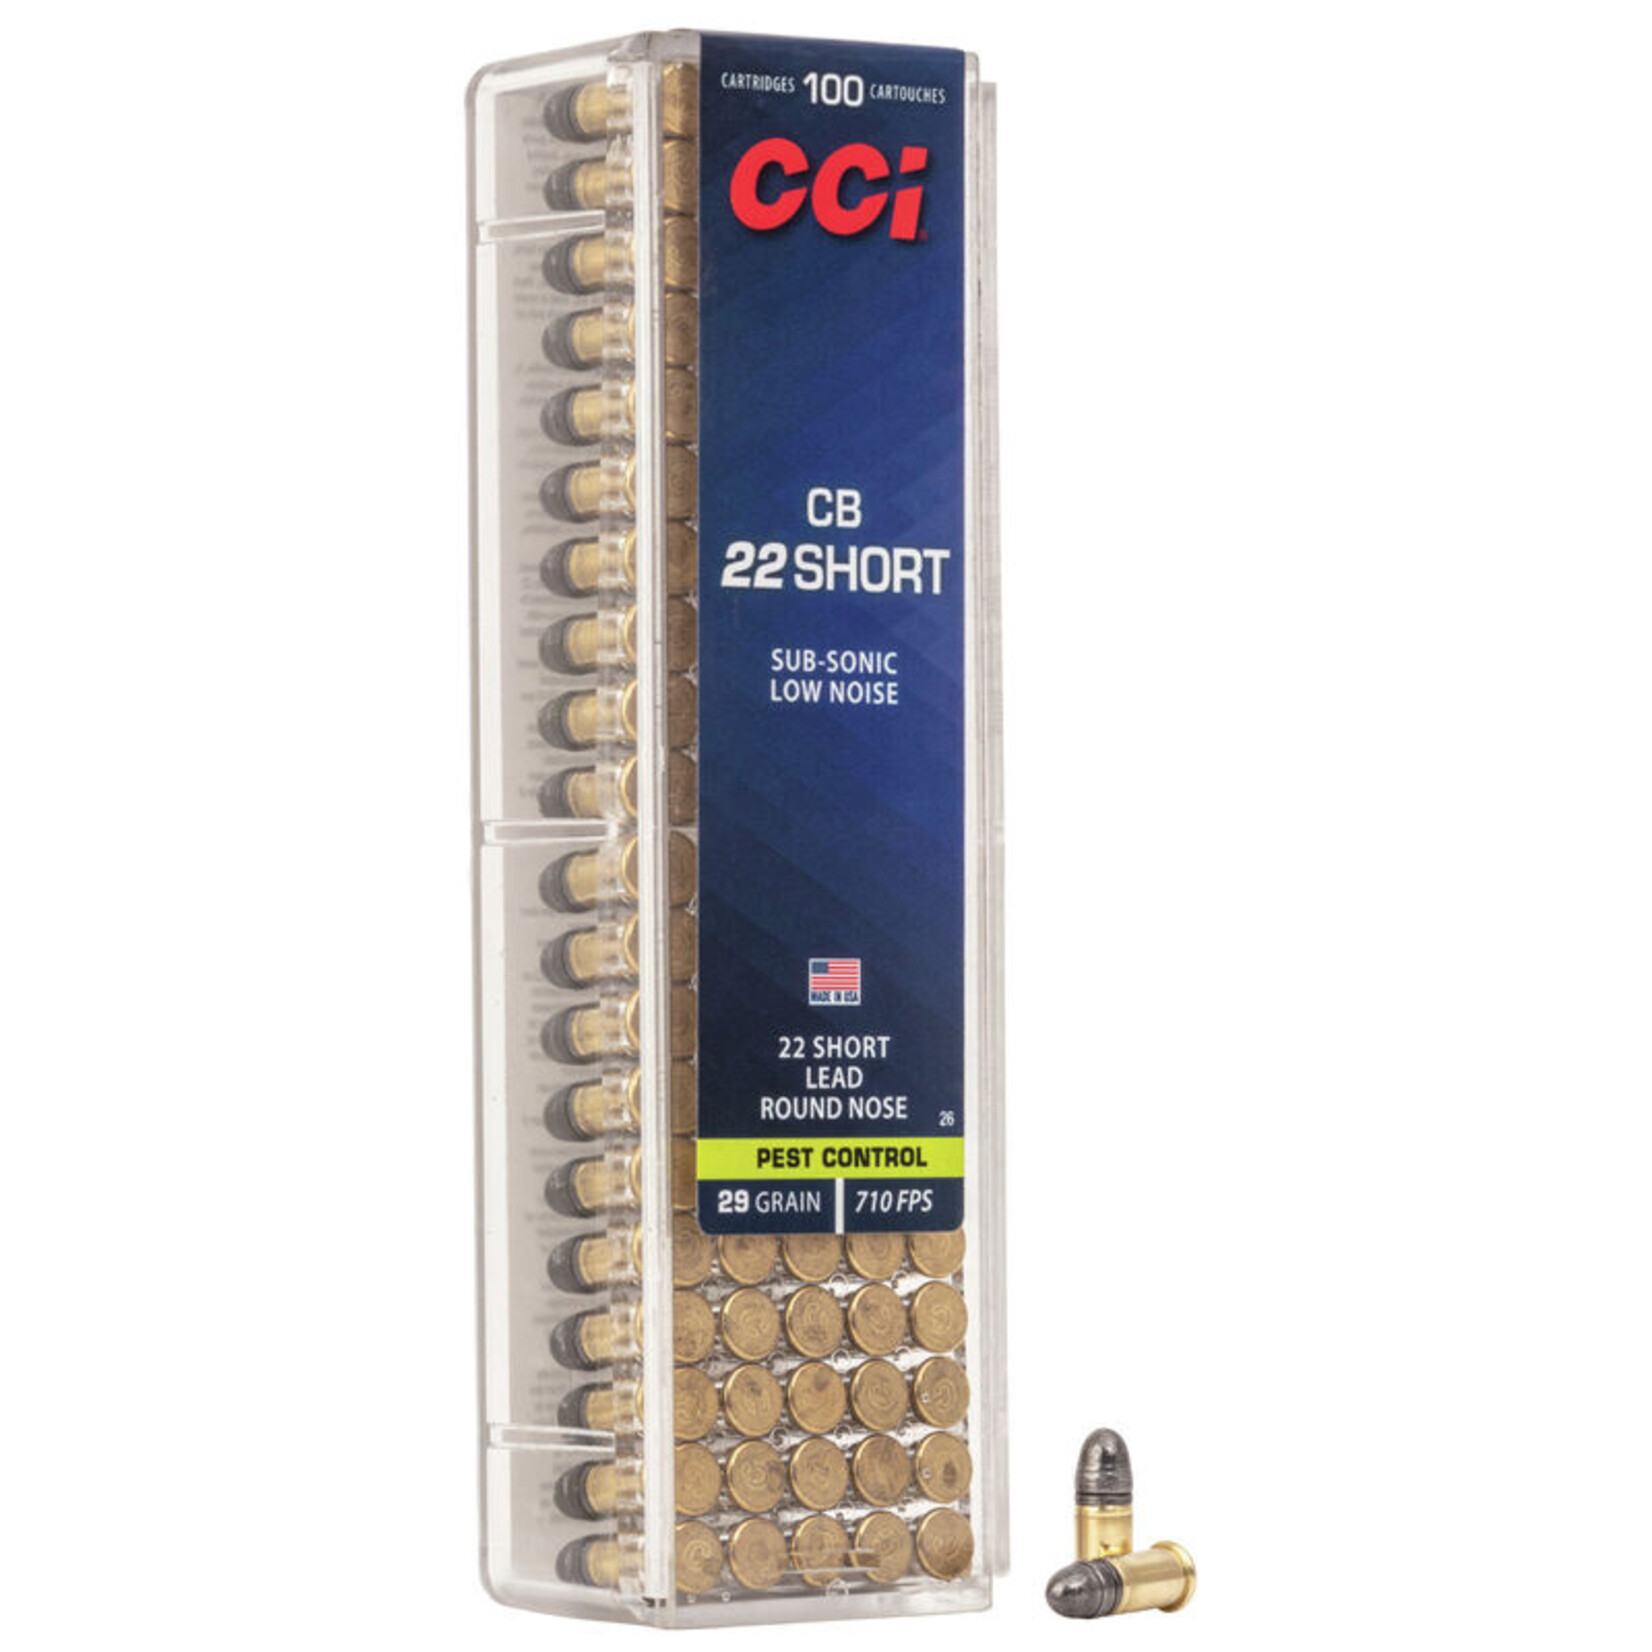 CCI Cci 22 Short -  29Gr - Lrn 710 Fps